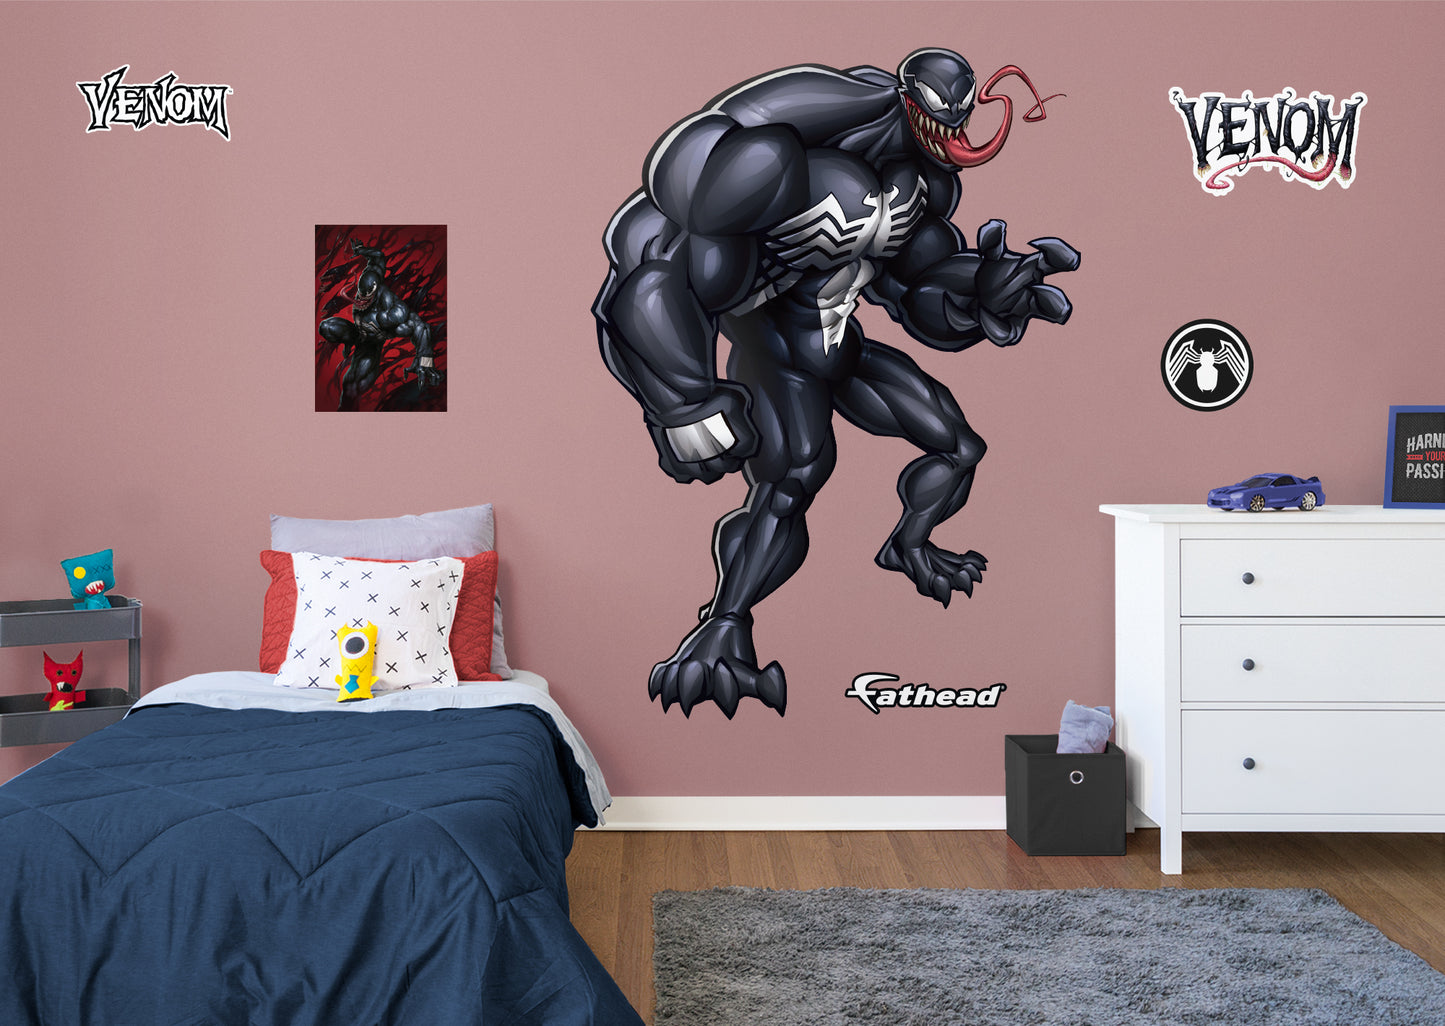 Venom: Venom Retro RealBig        - Officially Licensed Marvel Removable     Adhesive Decal